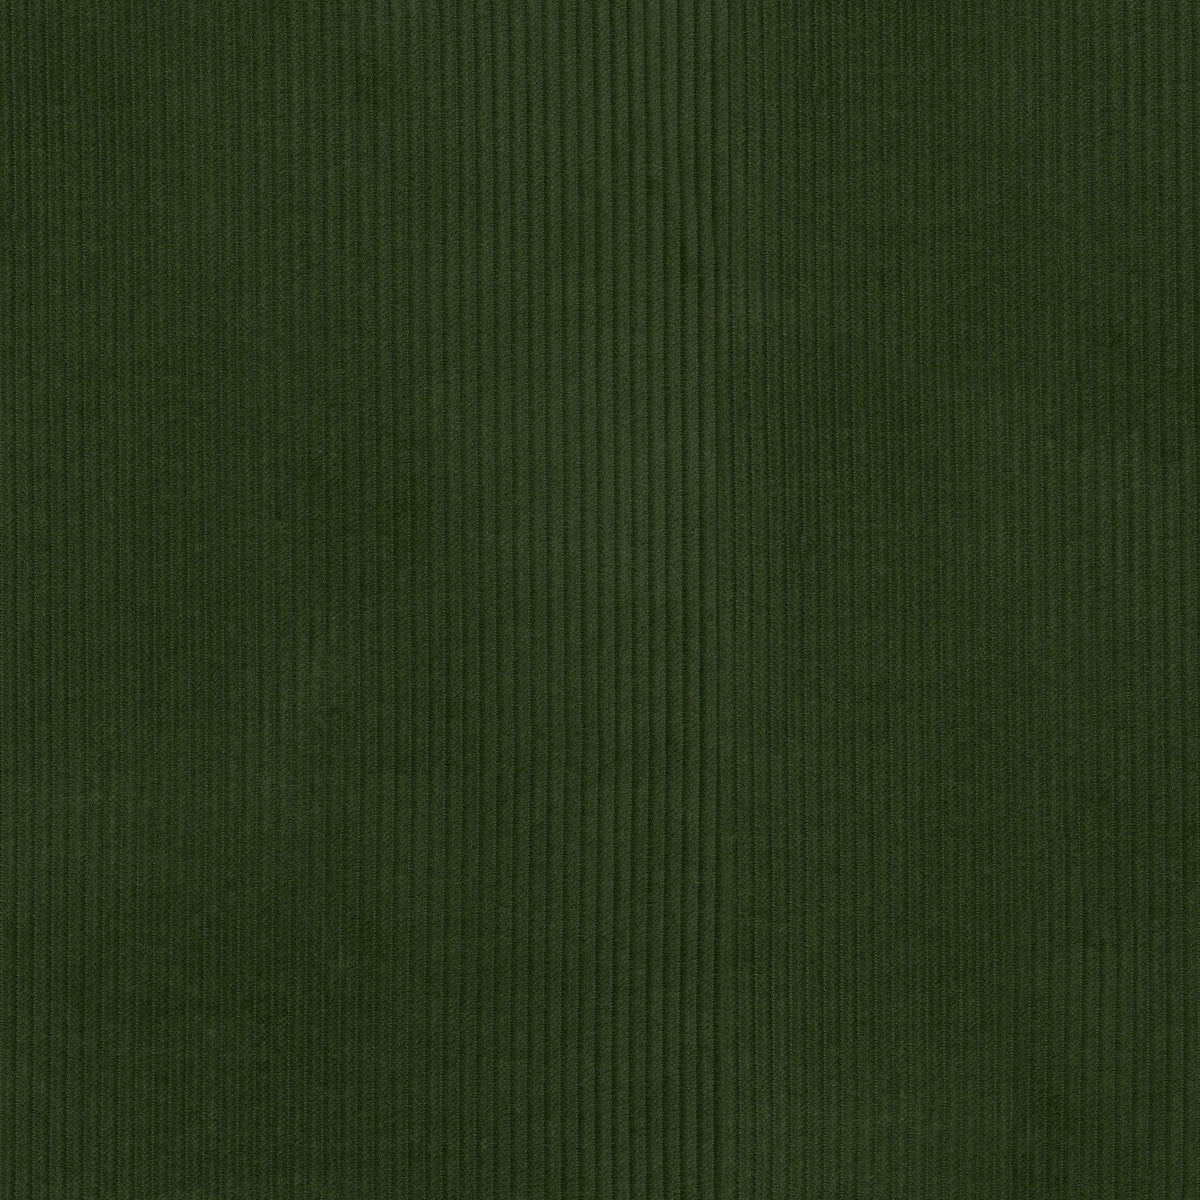 P/K Lifestyles Wales - Evergreen 412020 Fabric Swatch